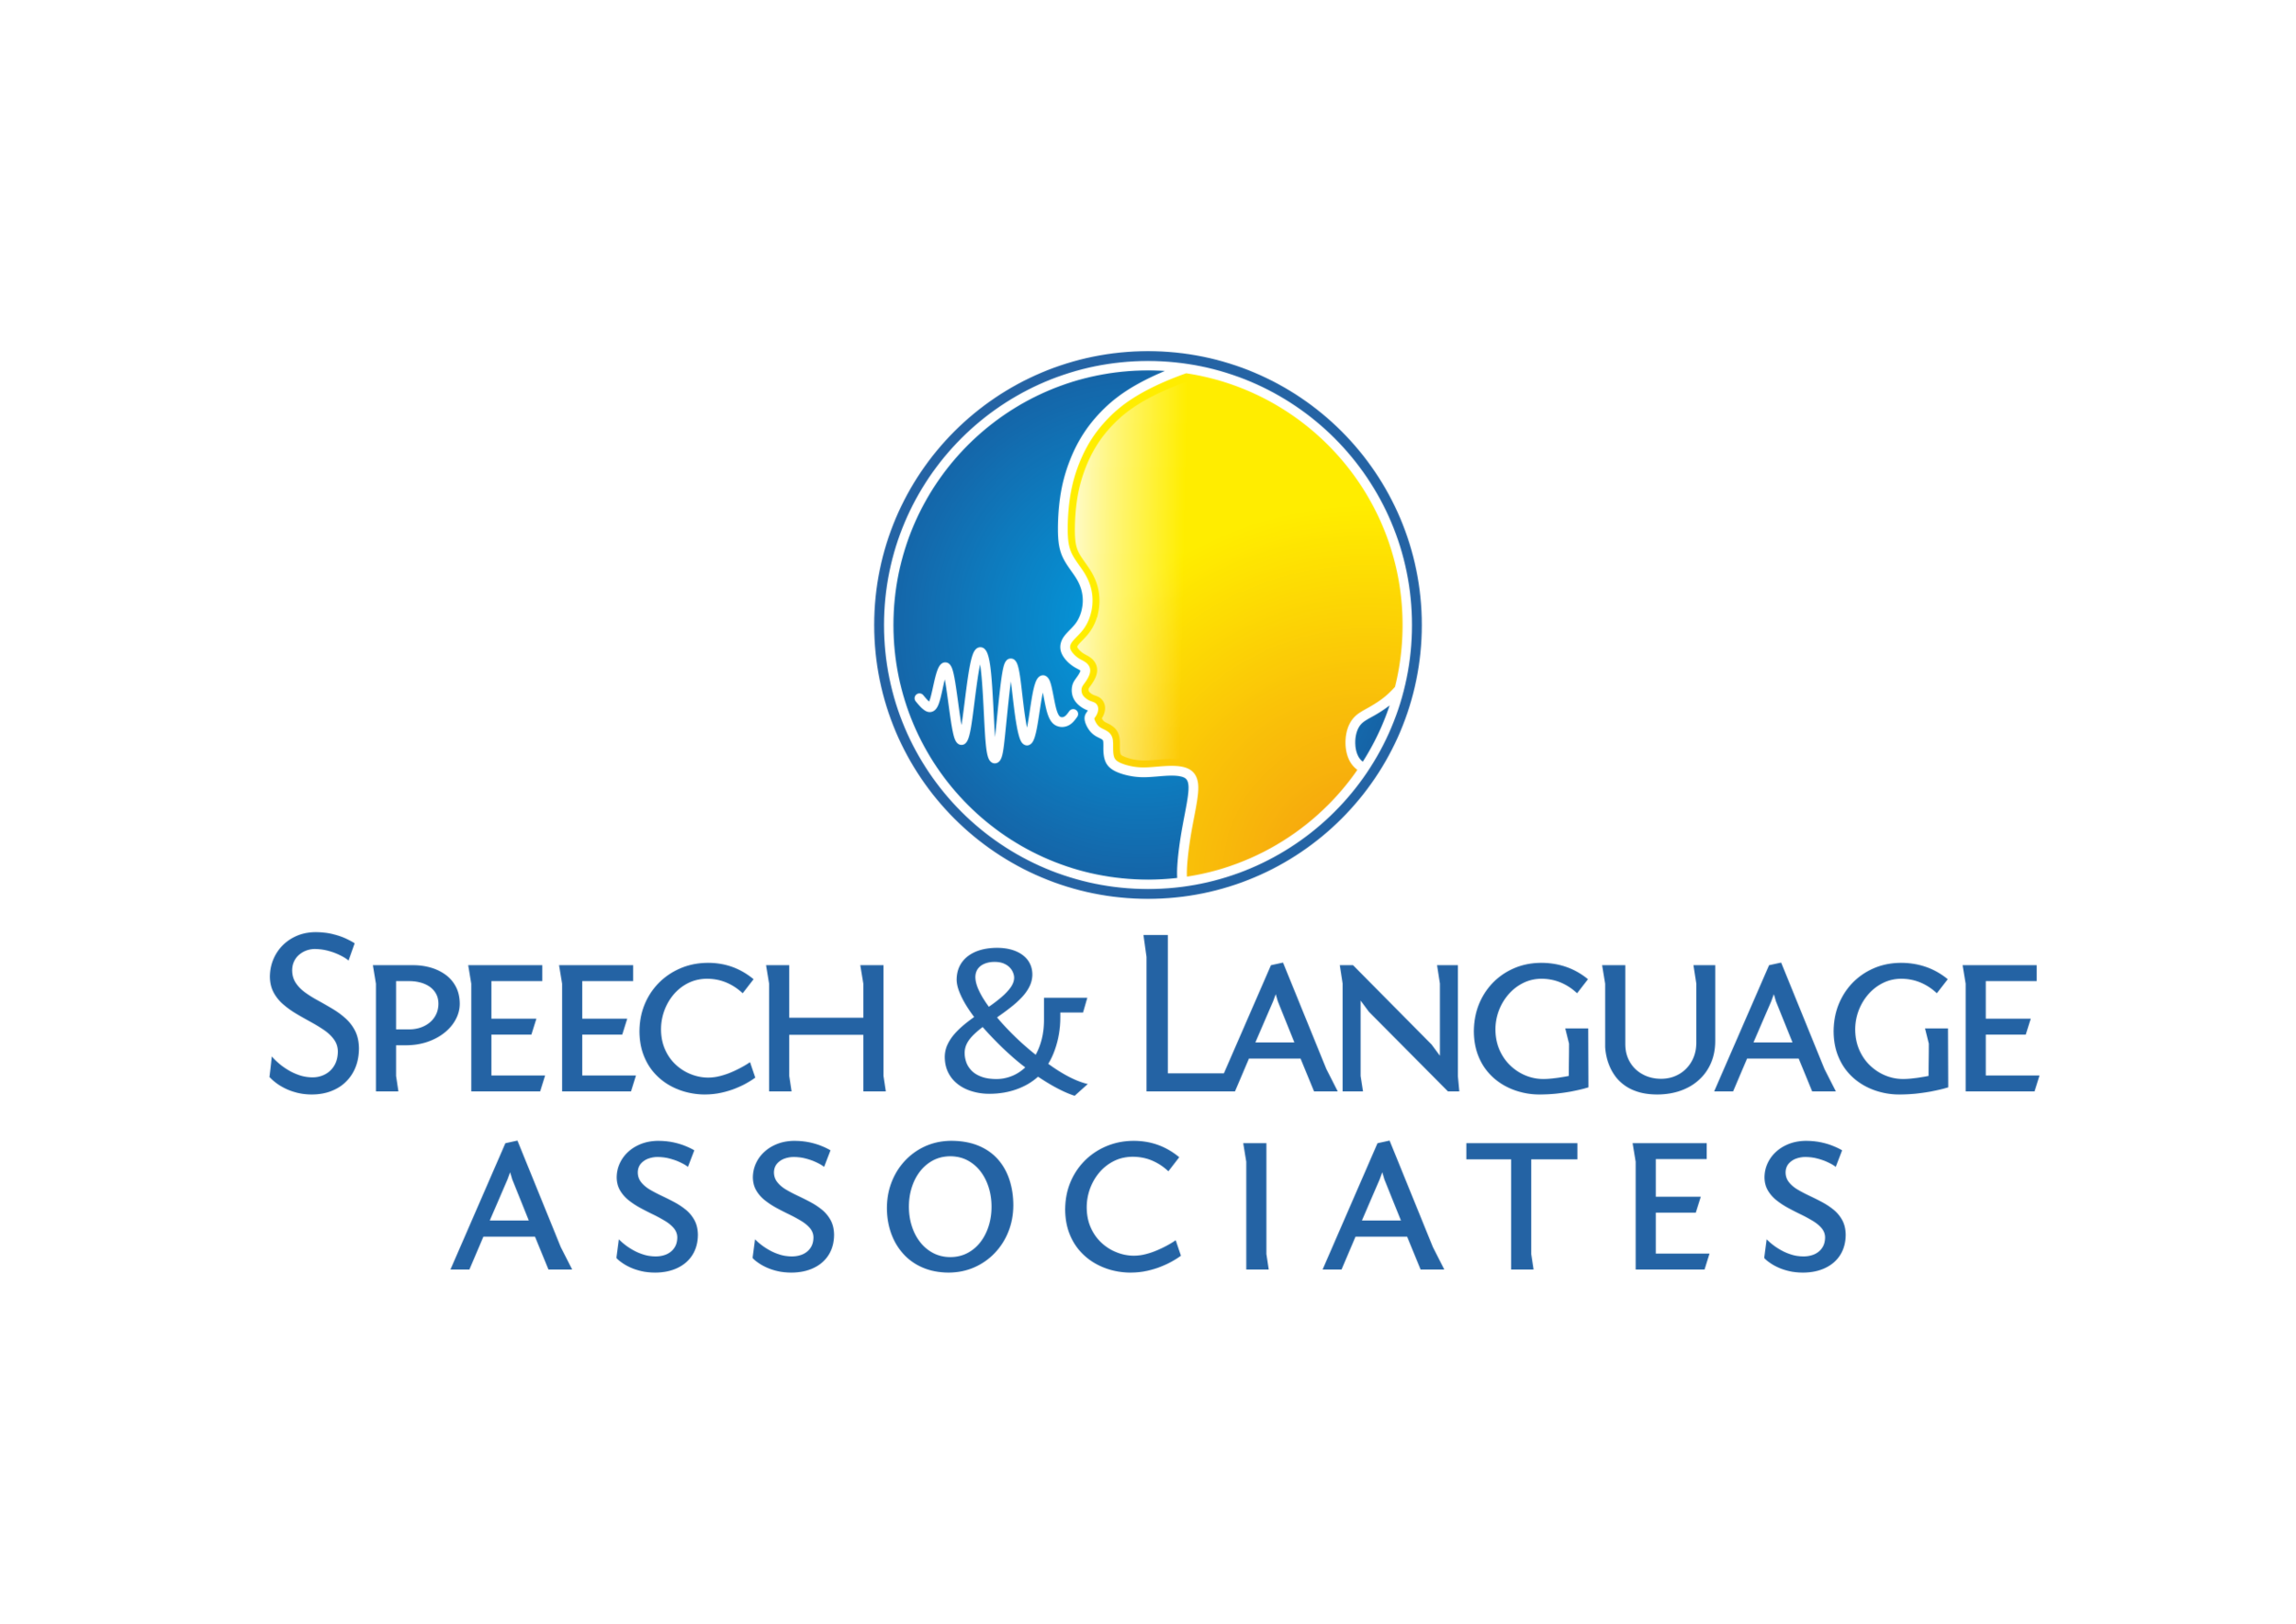 Speech &amp; Language Associates | Dayton, Kettering, Beavercreek, Centerville and Greater Miami Valley area